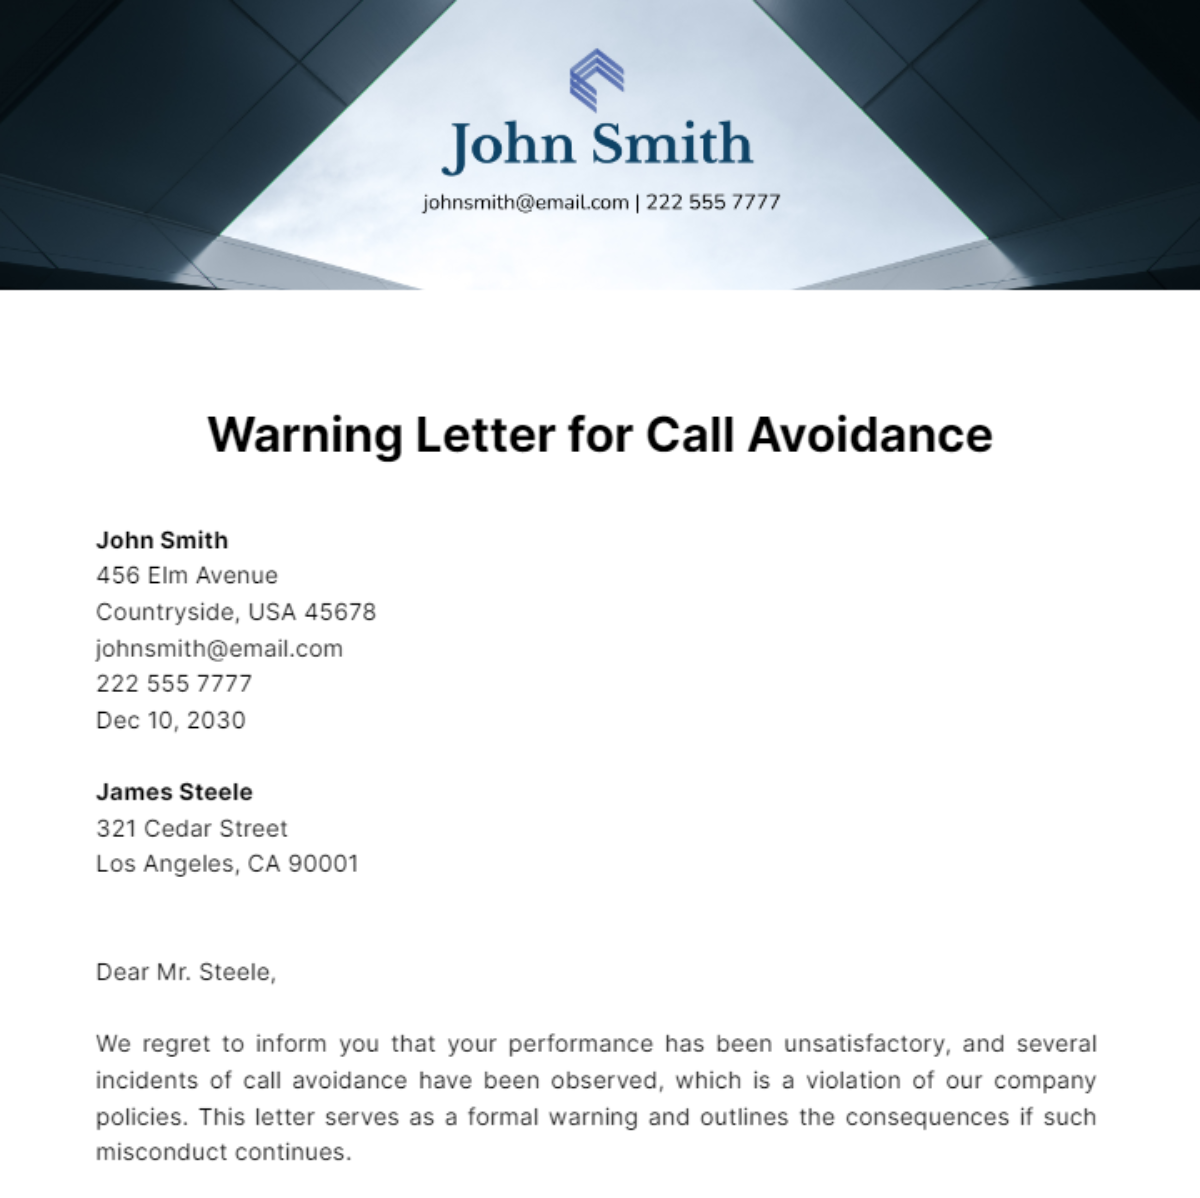 Warning Letter For Call Avoidance Template